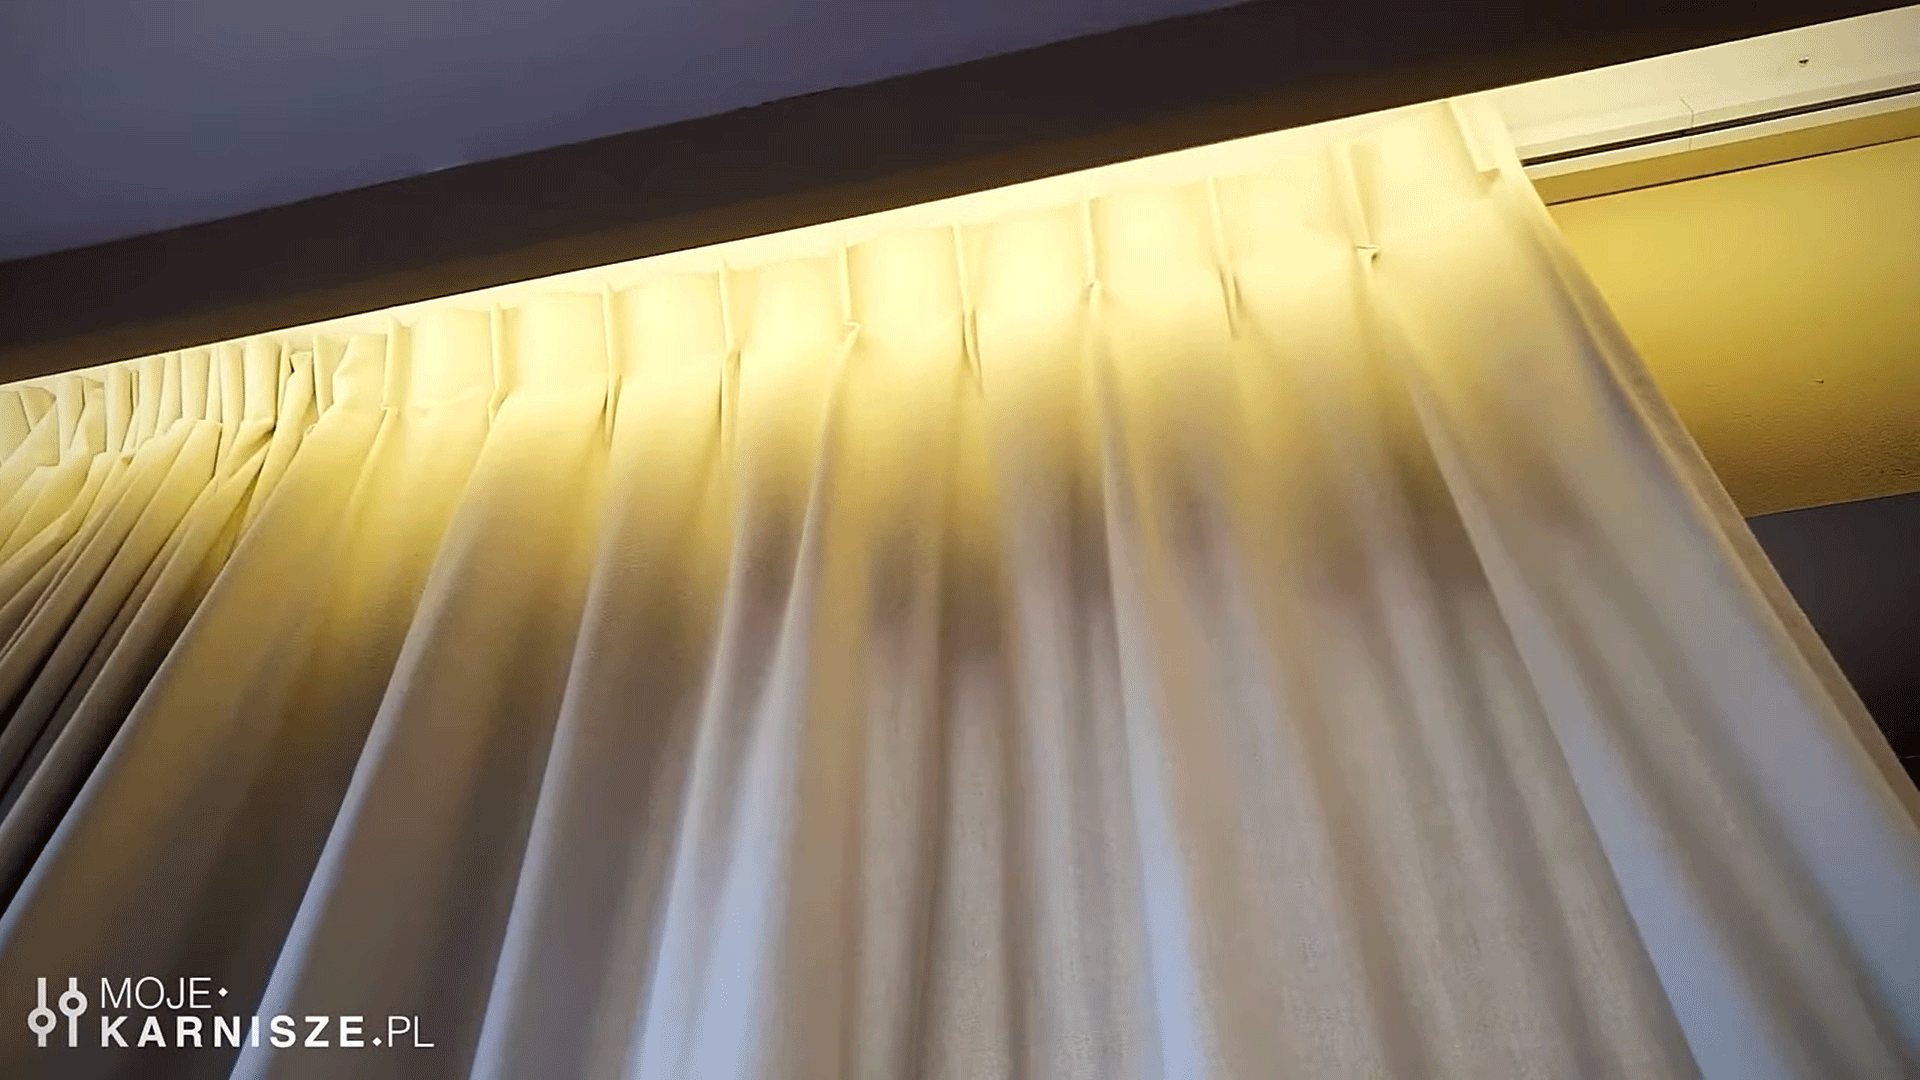 handling KNALL corner electric curtain rod